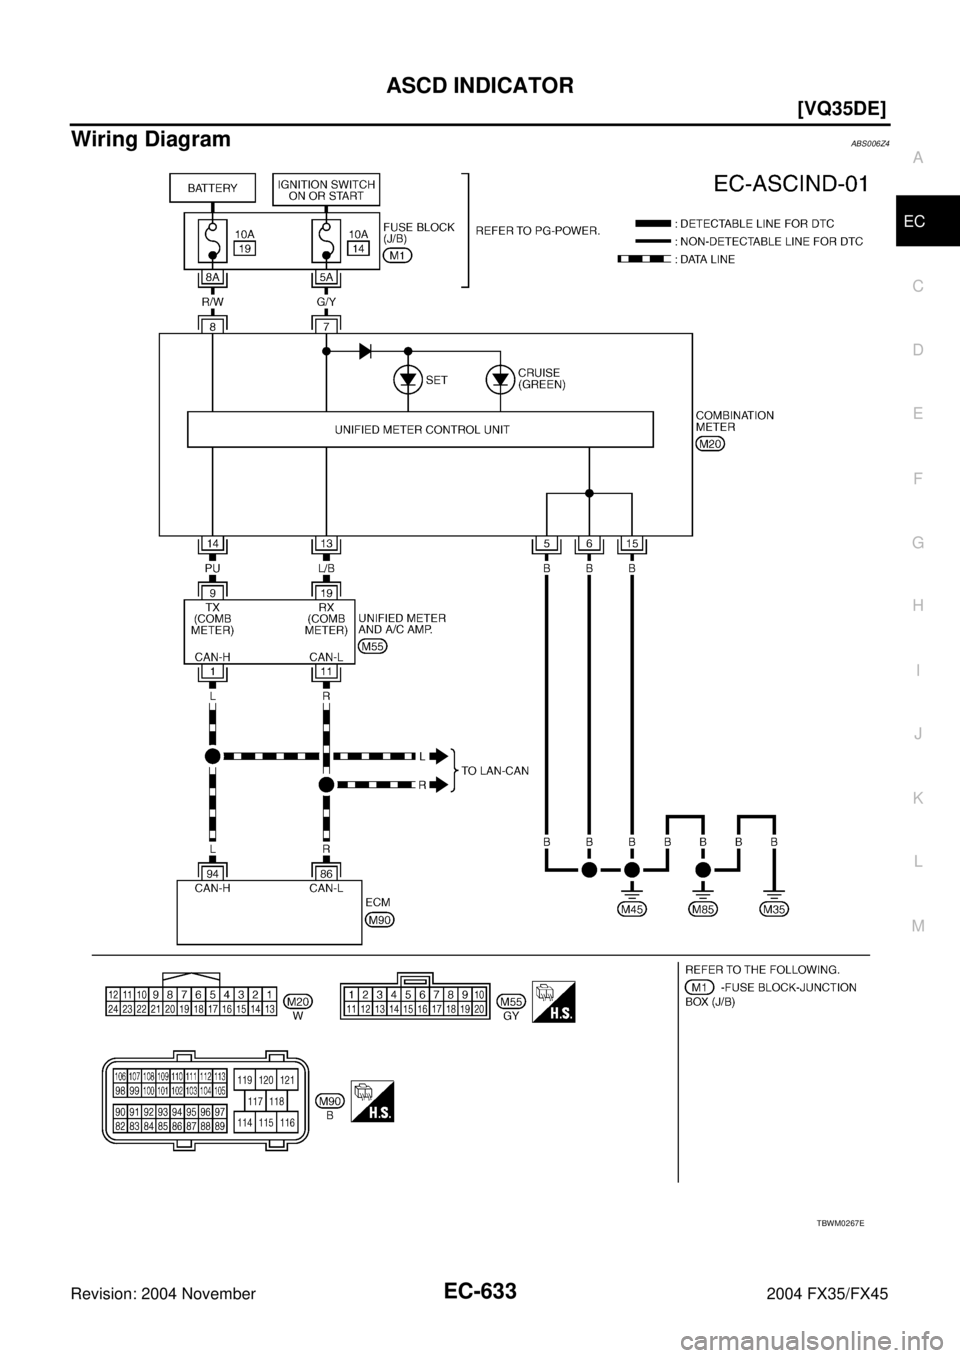 INFINITI FX35 2004  Service Manual ASCD INDICATOR
EC-633
[VQ35DE]
C
D
E
F
G
H
I
J
K
L
MA
EC
Revision: 2004 November 2004 FX35/FX45
Wiring DiagramABS006Z4
TBWM0267E 